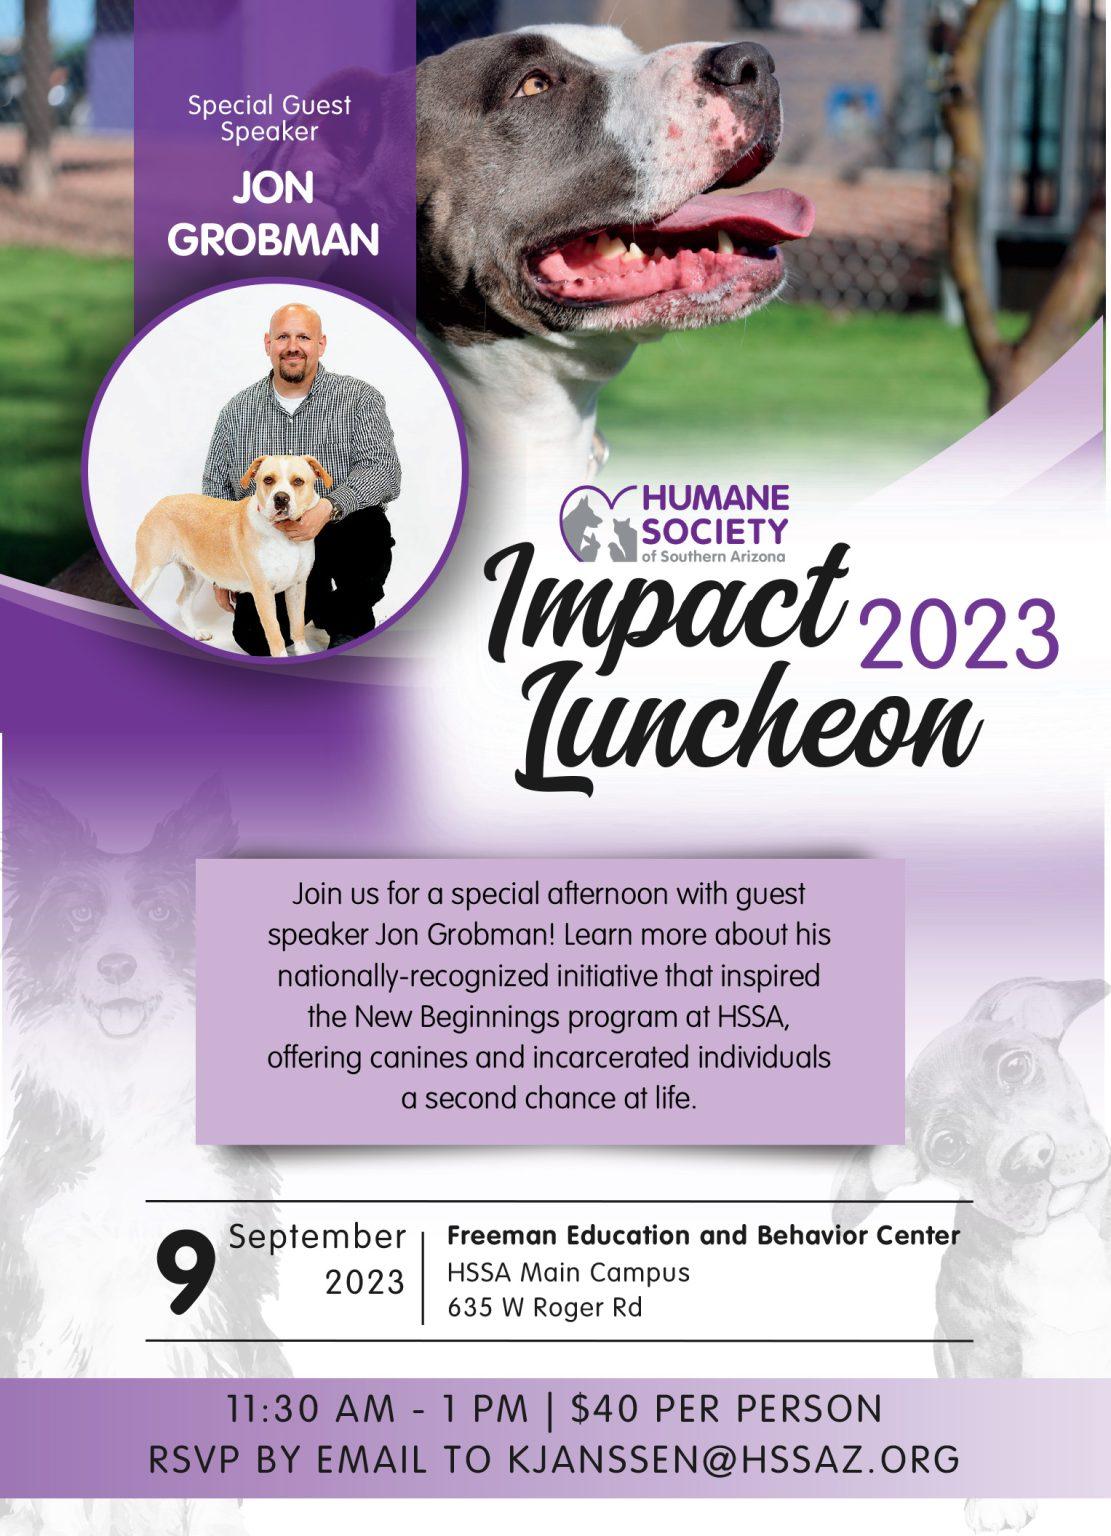 Annual Impact Luncheon | Humane Society of Southern Arizona